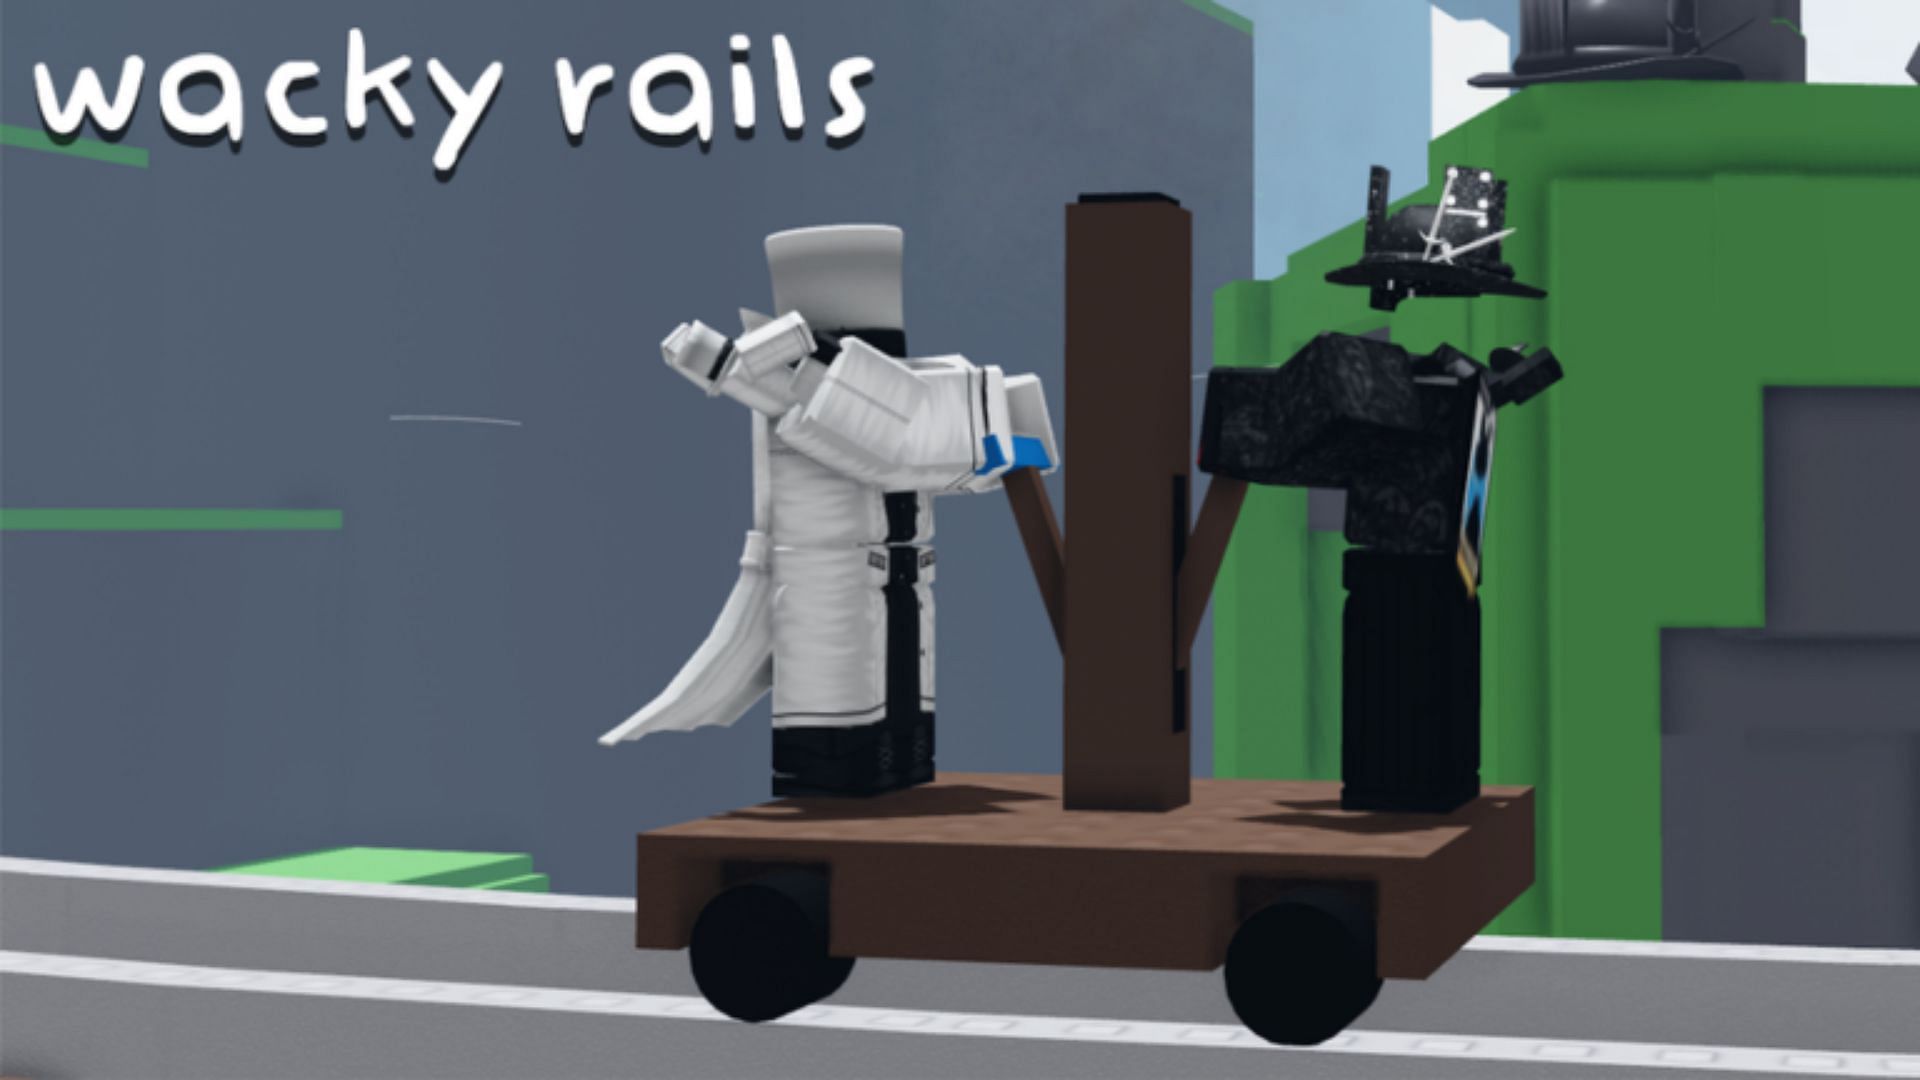 About Wacky Rails (Image via Roblox)